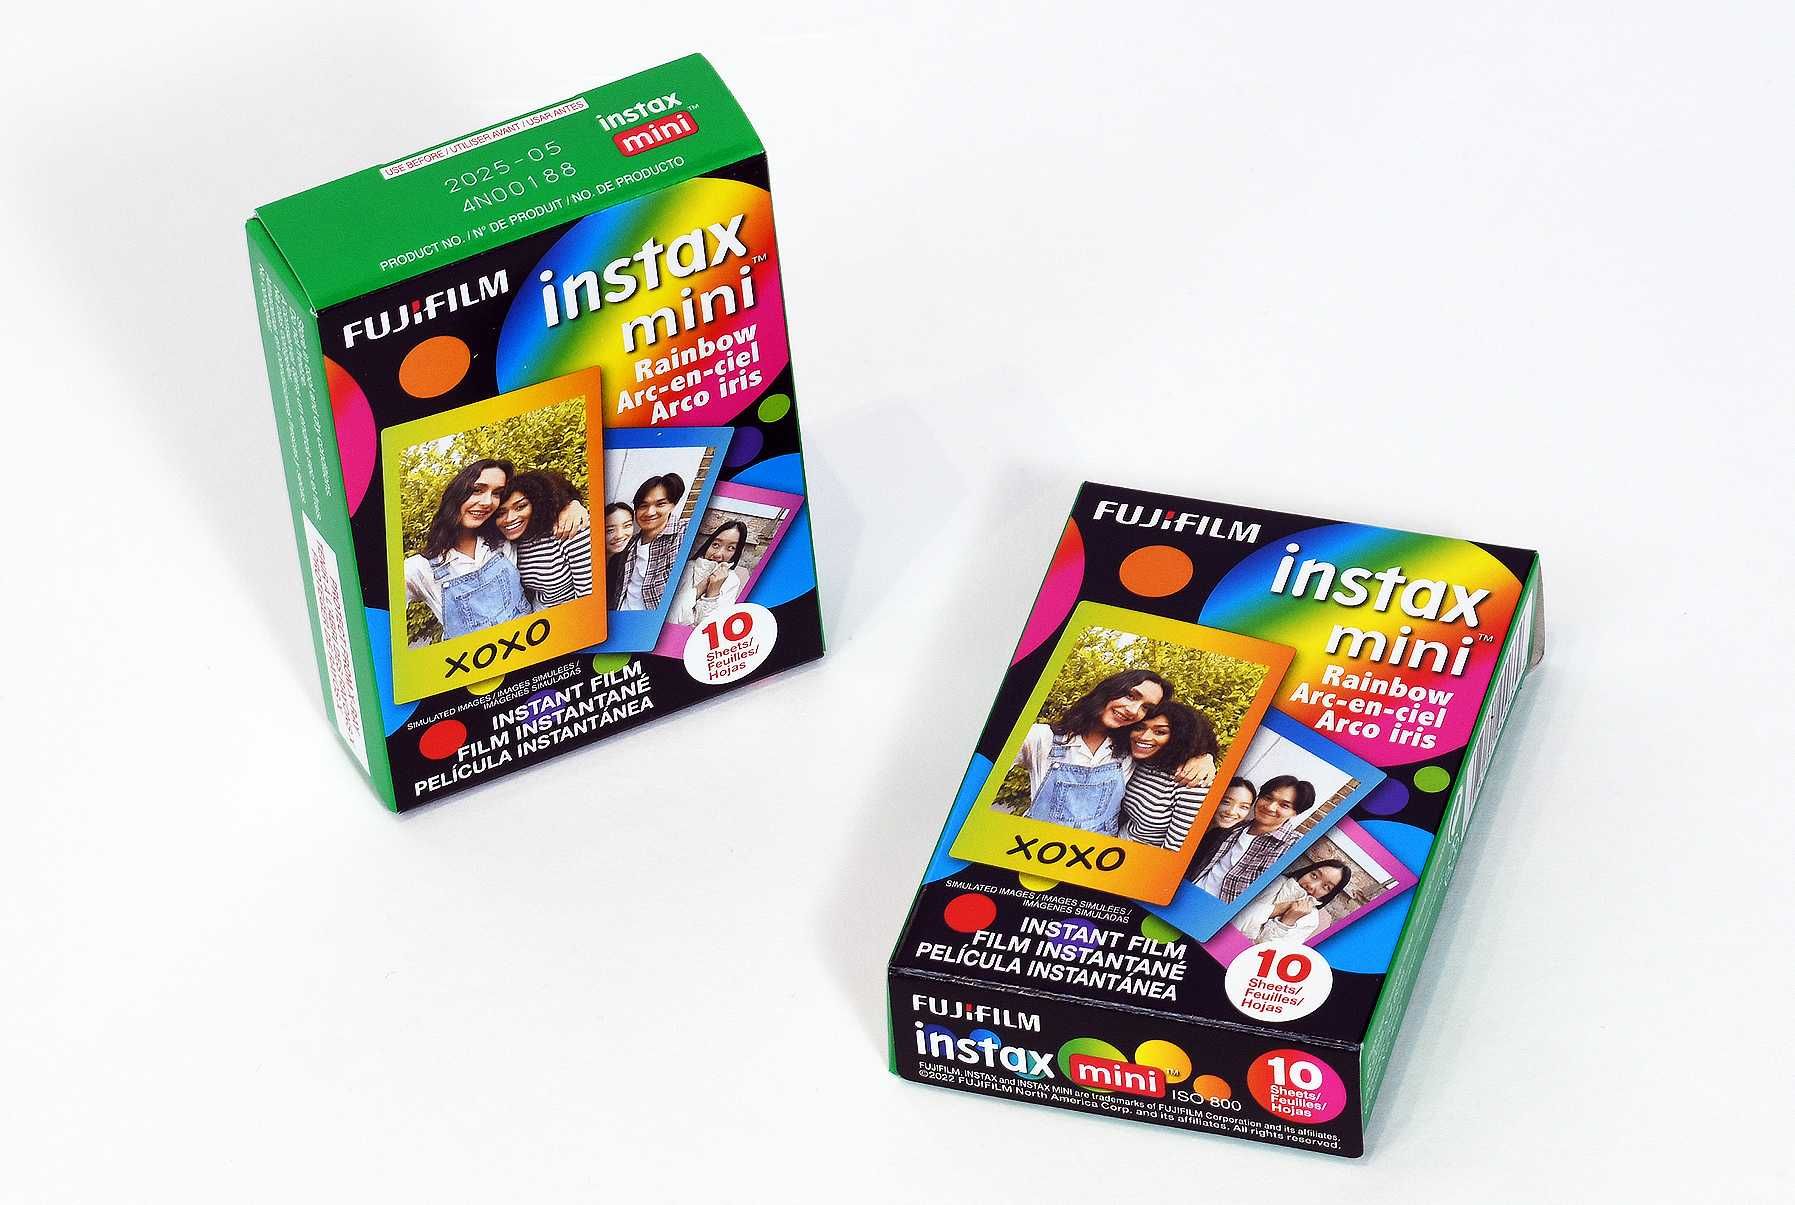 FUJIFILM INSTAX MINI Rainbow Instant Film (10 фото) Made in Japan.